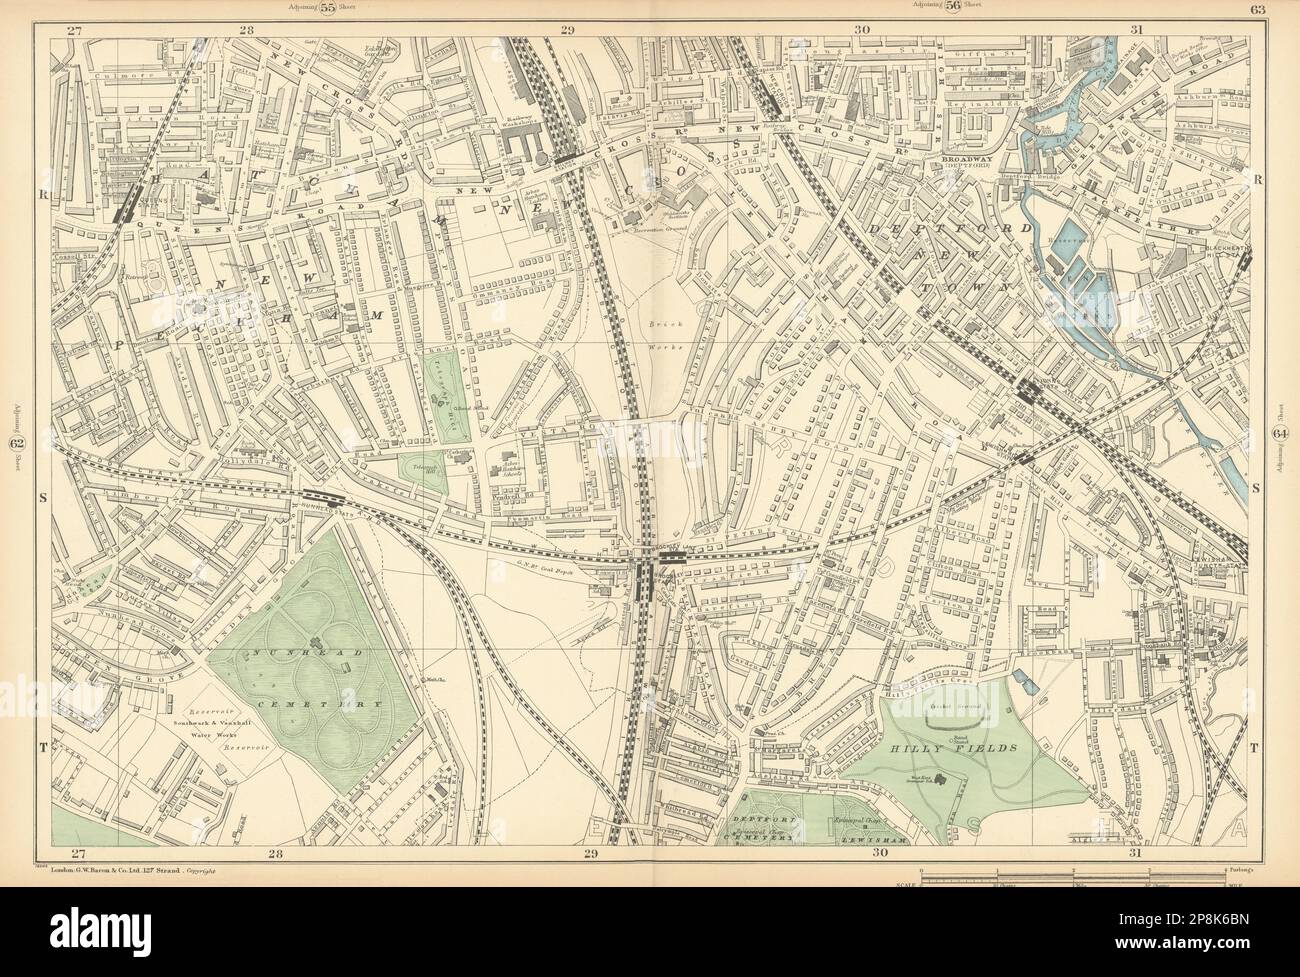 NEW CROSS Deptford Nunhead Lewisham St John's Nunhead Brockley Deptford 1900 map Stock Photo